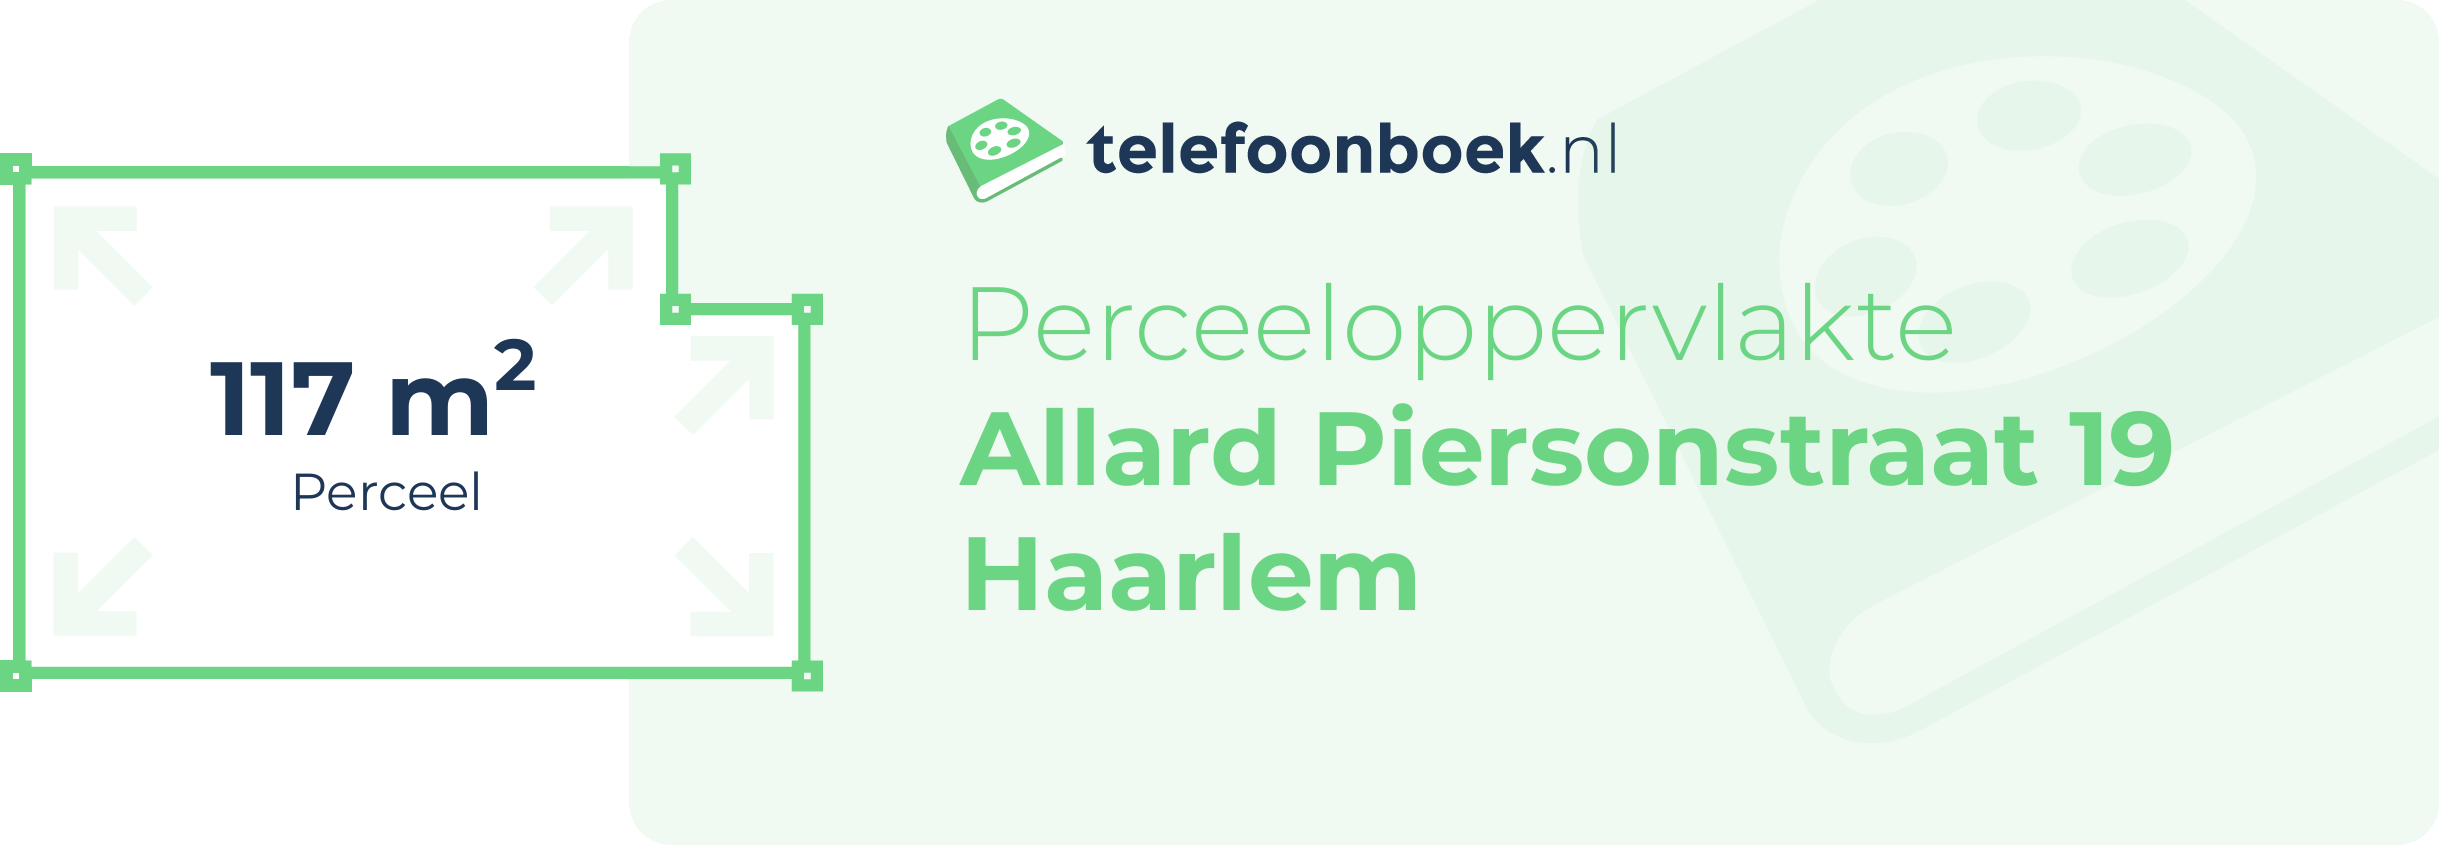 Perceeloppervlakte Allard Piersonstraat 19 Haarlem